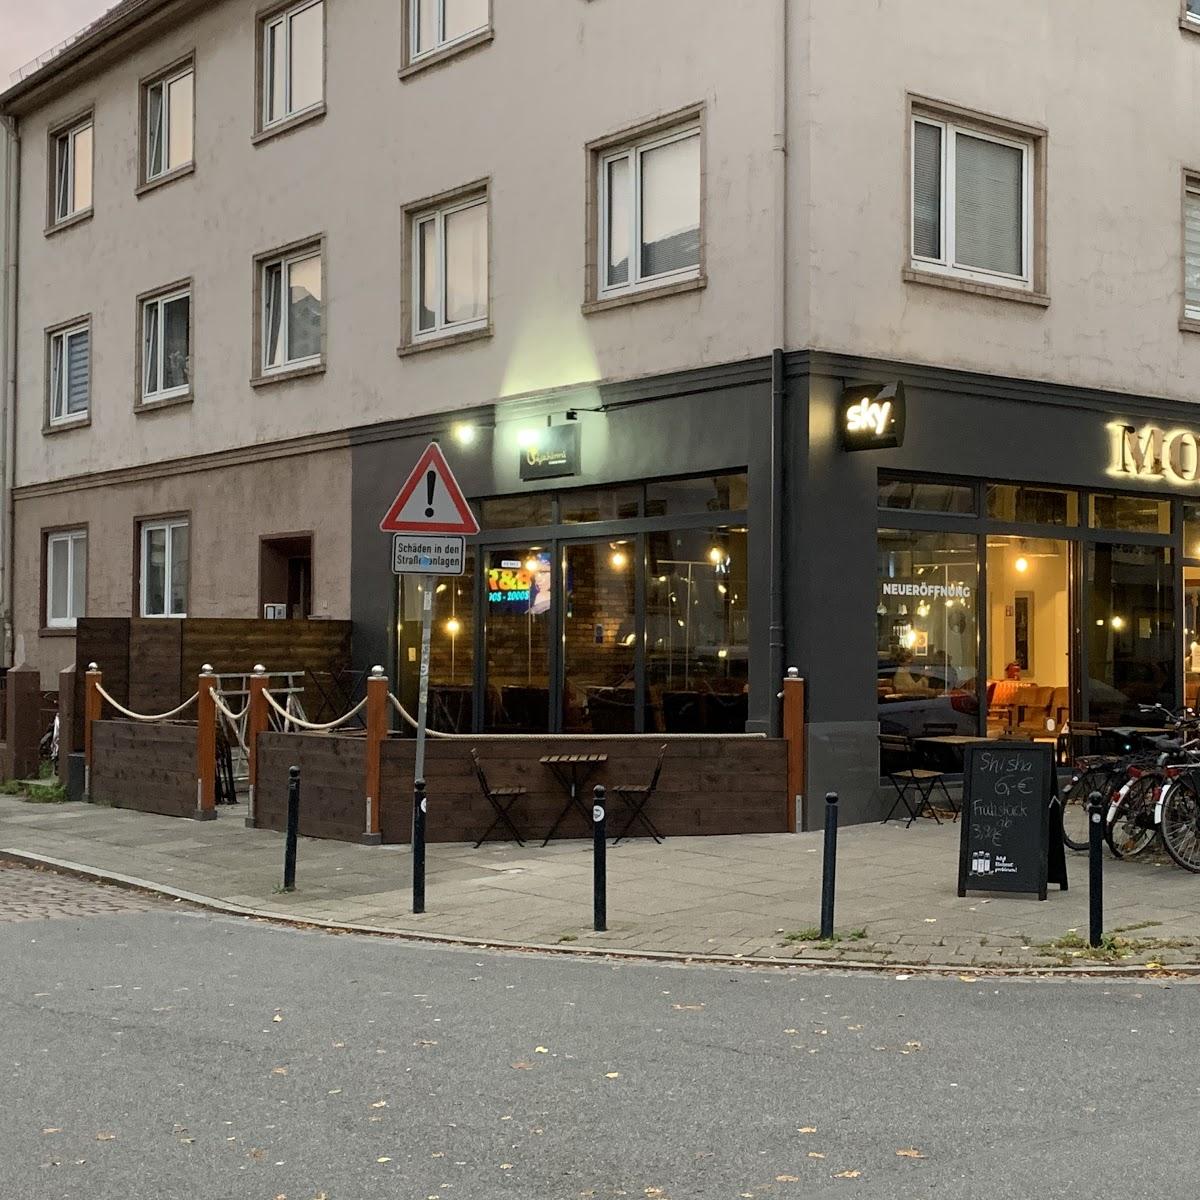 Restaurant "MOKKA Café Bar Lounge" in Bremen